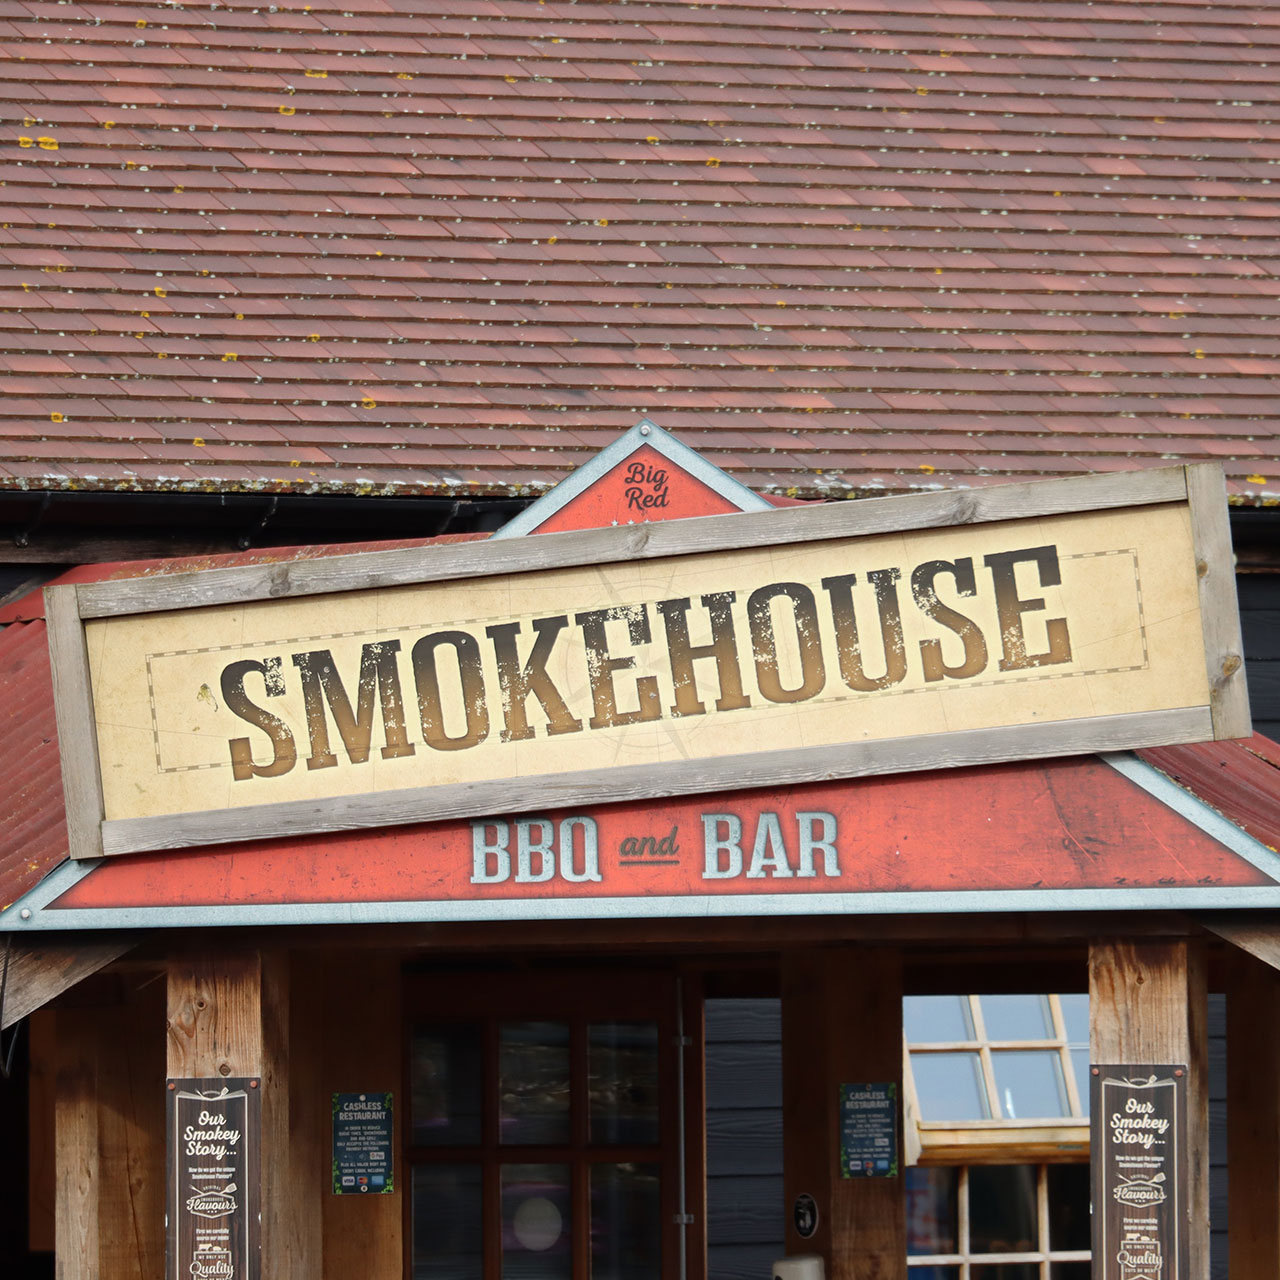 Smokehouse BBQ & Bar Page Icon Image